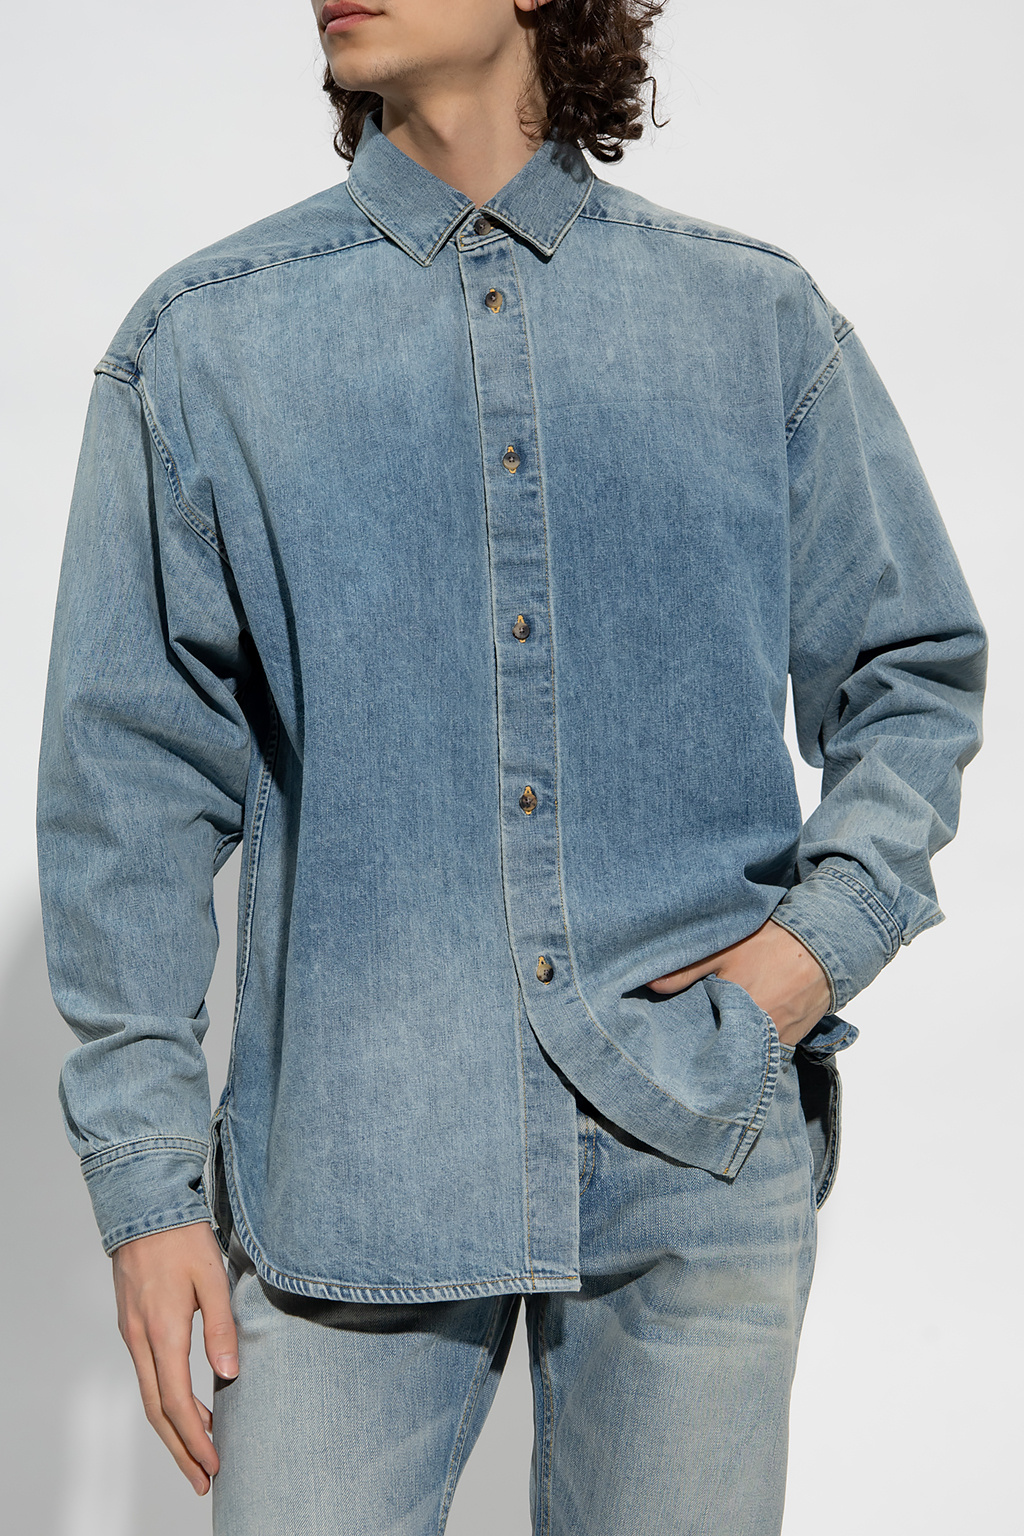 Blue Denim shirt Fear Of God - SchaferandweinerShops Canada - Global V-Neck  Sweater Vest